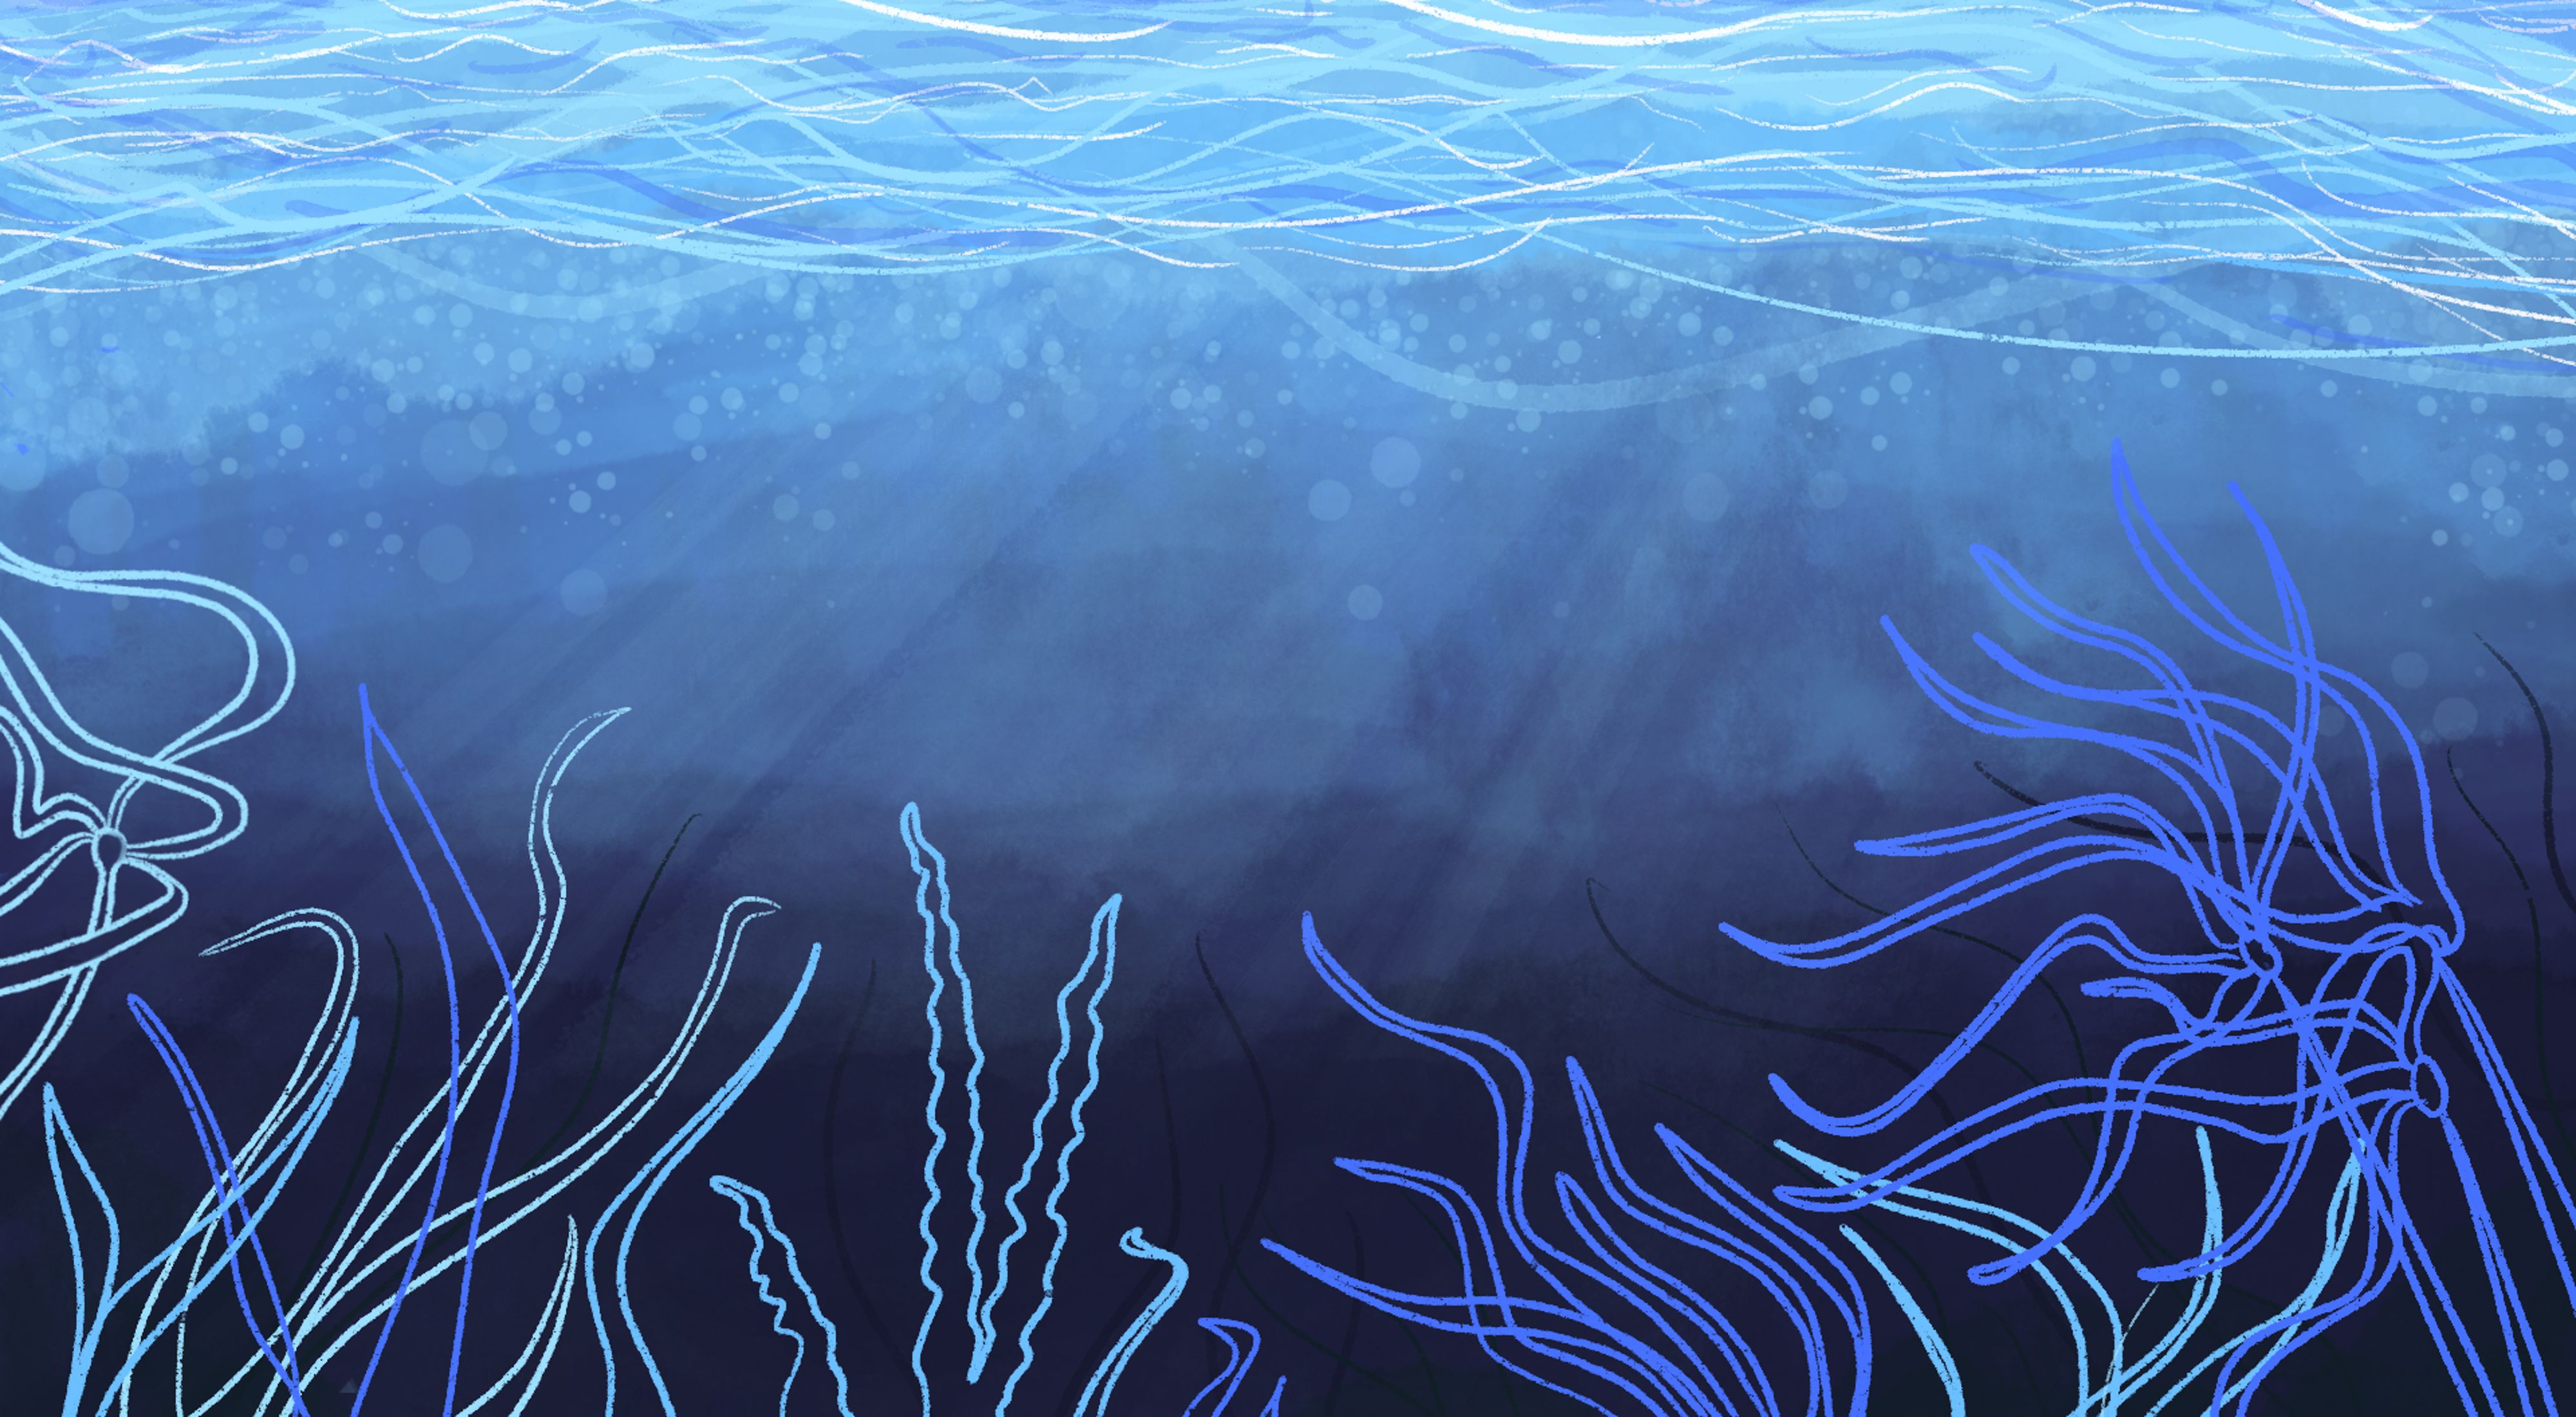 Illustration of sea grasses underwater.